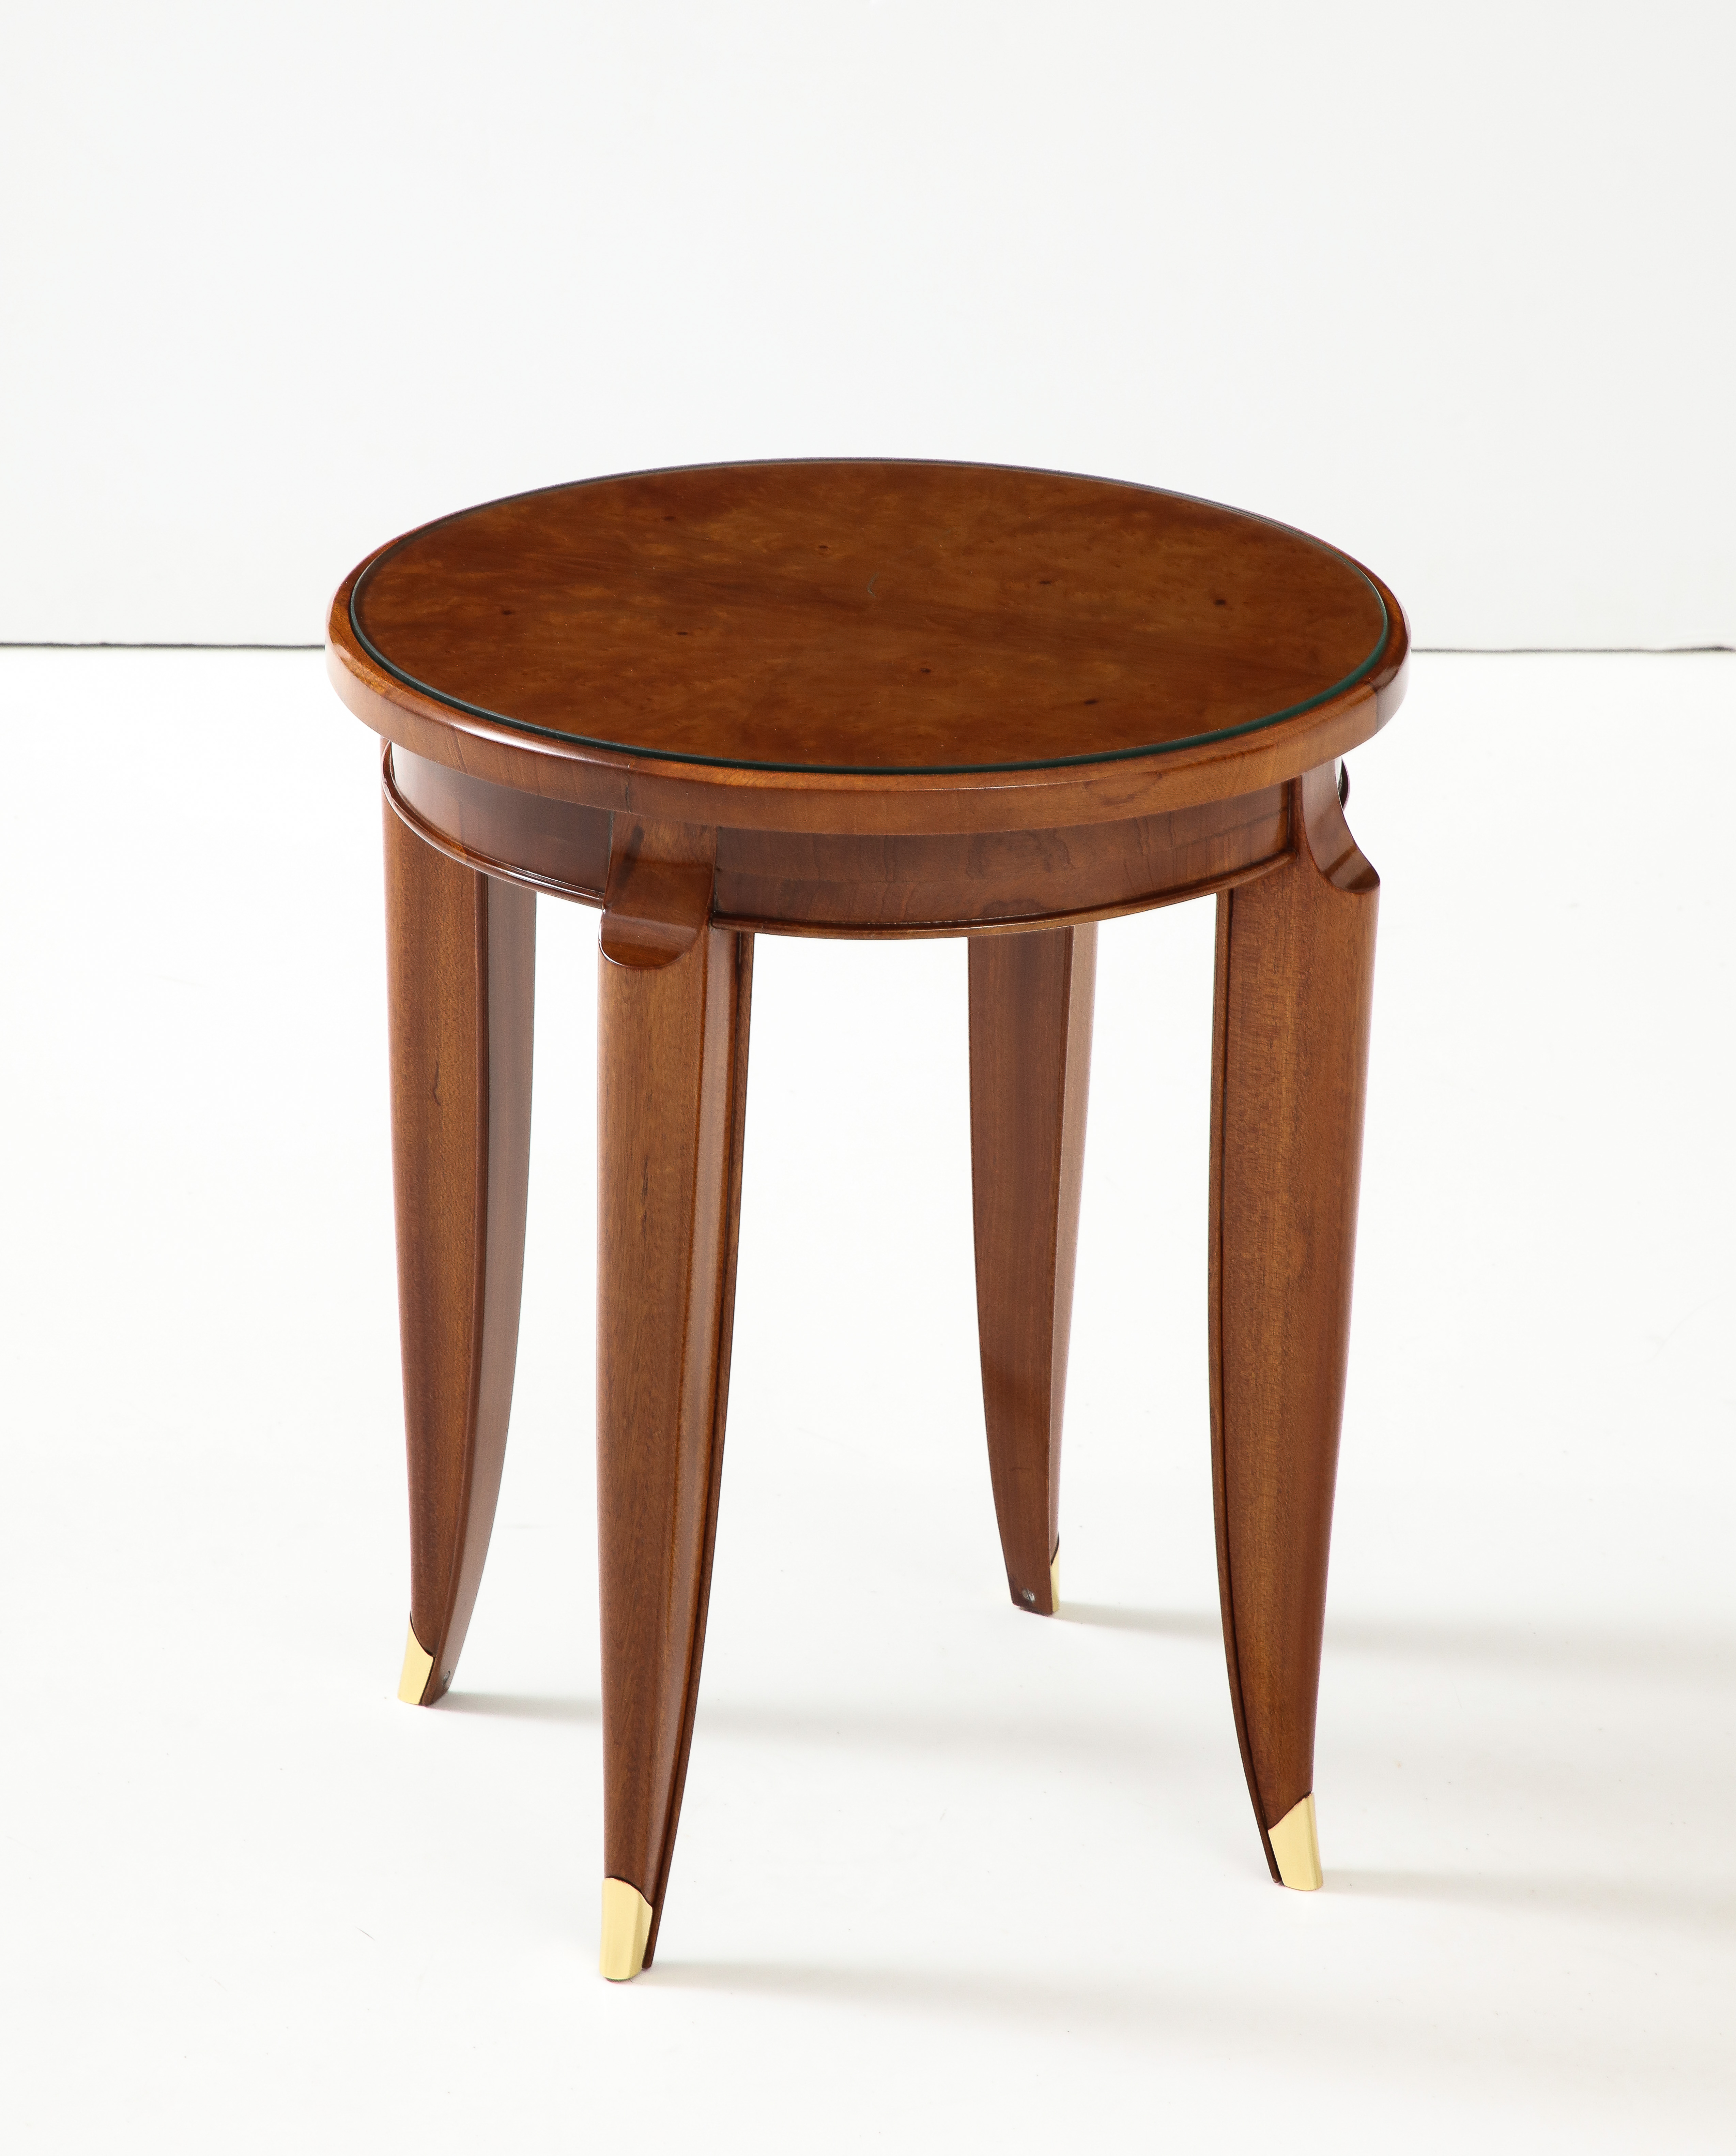 Fine Art Derco side table designed by Maurice Jallot. Frace, 1940's.